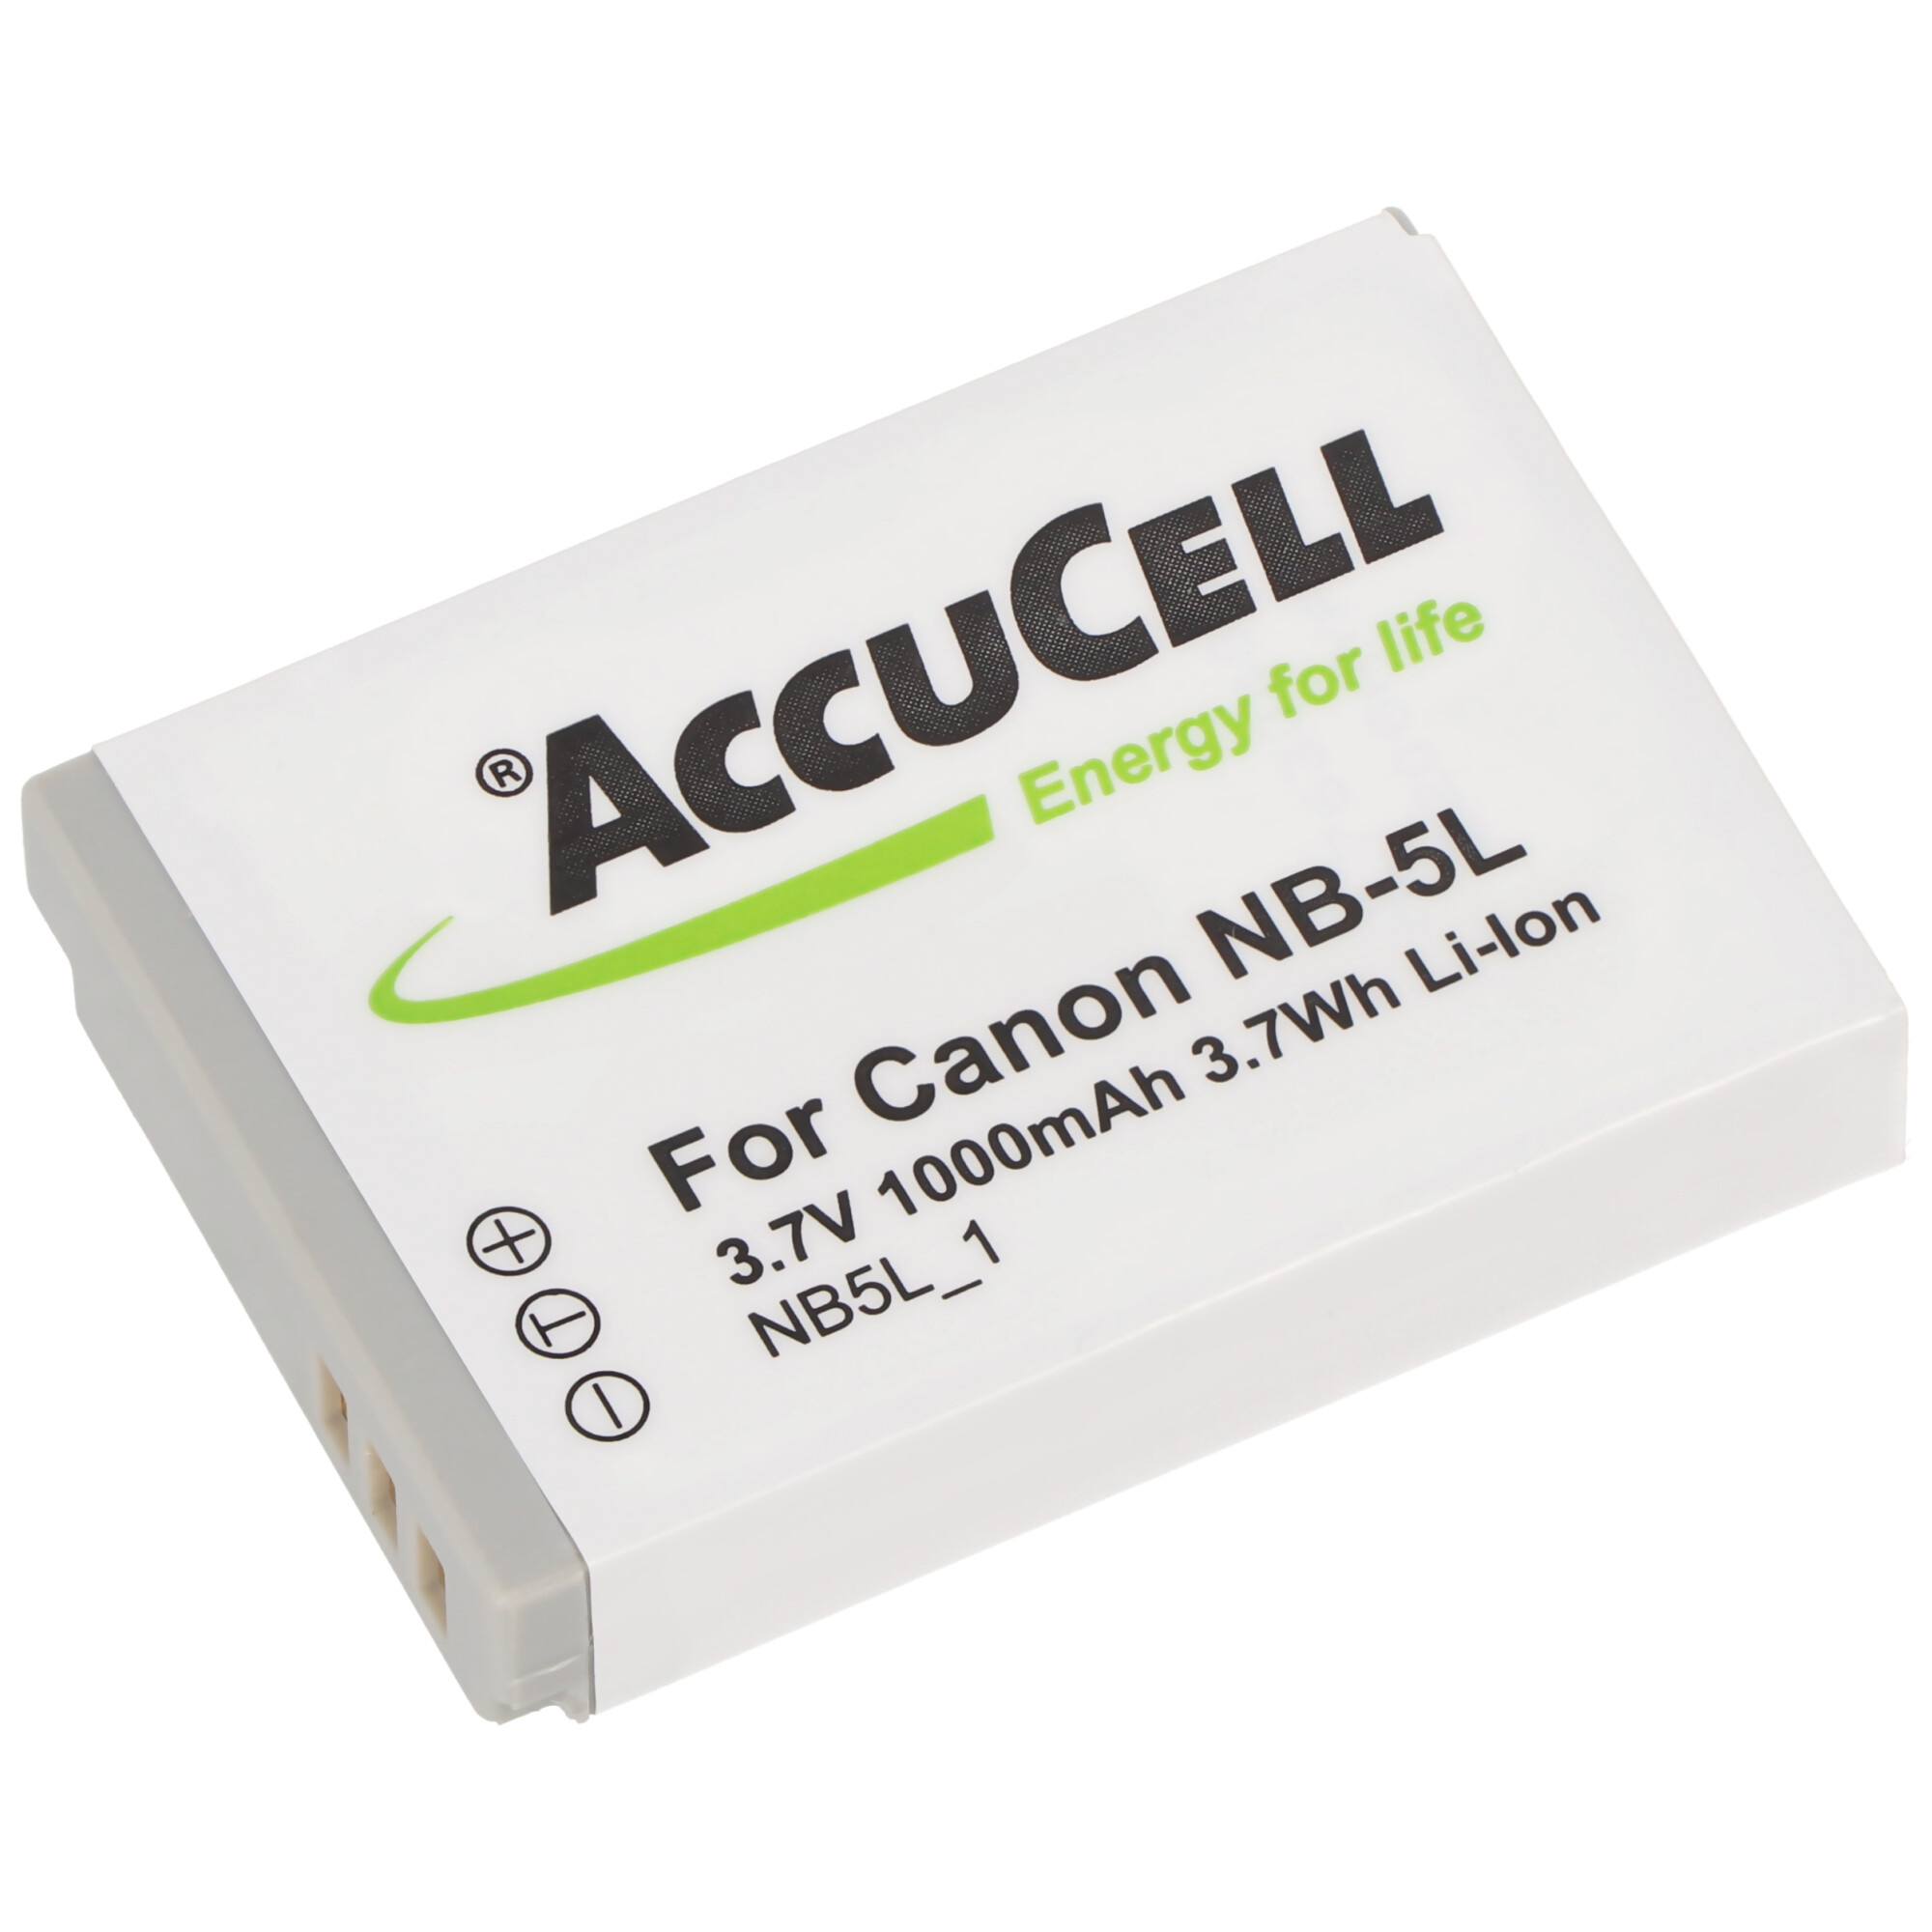 AccuCell Akku passend für Canon NB-5L Digicam IXUS 850 IS